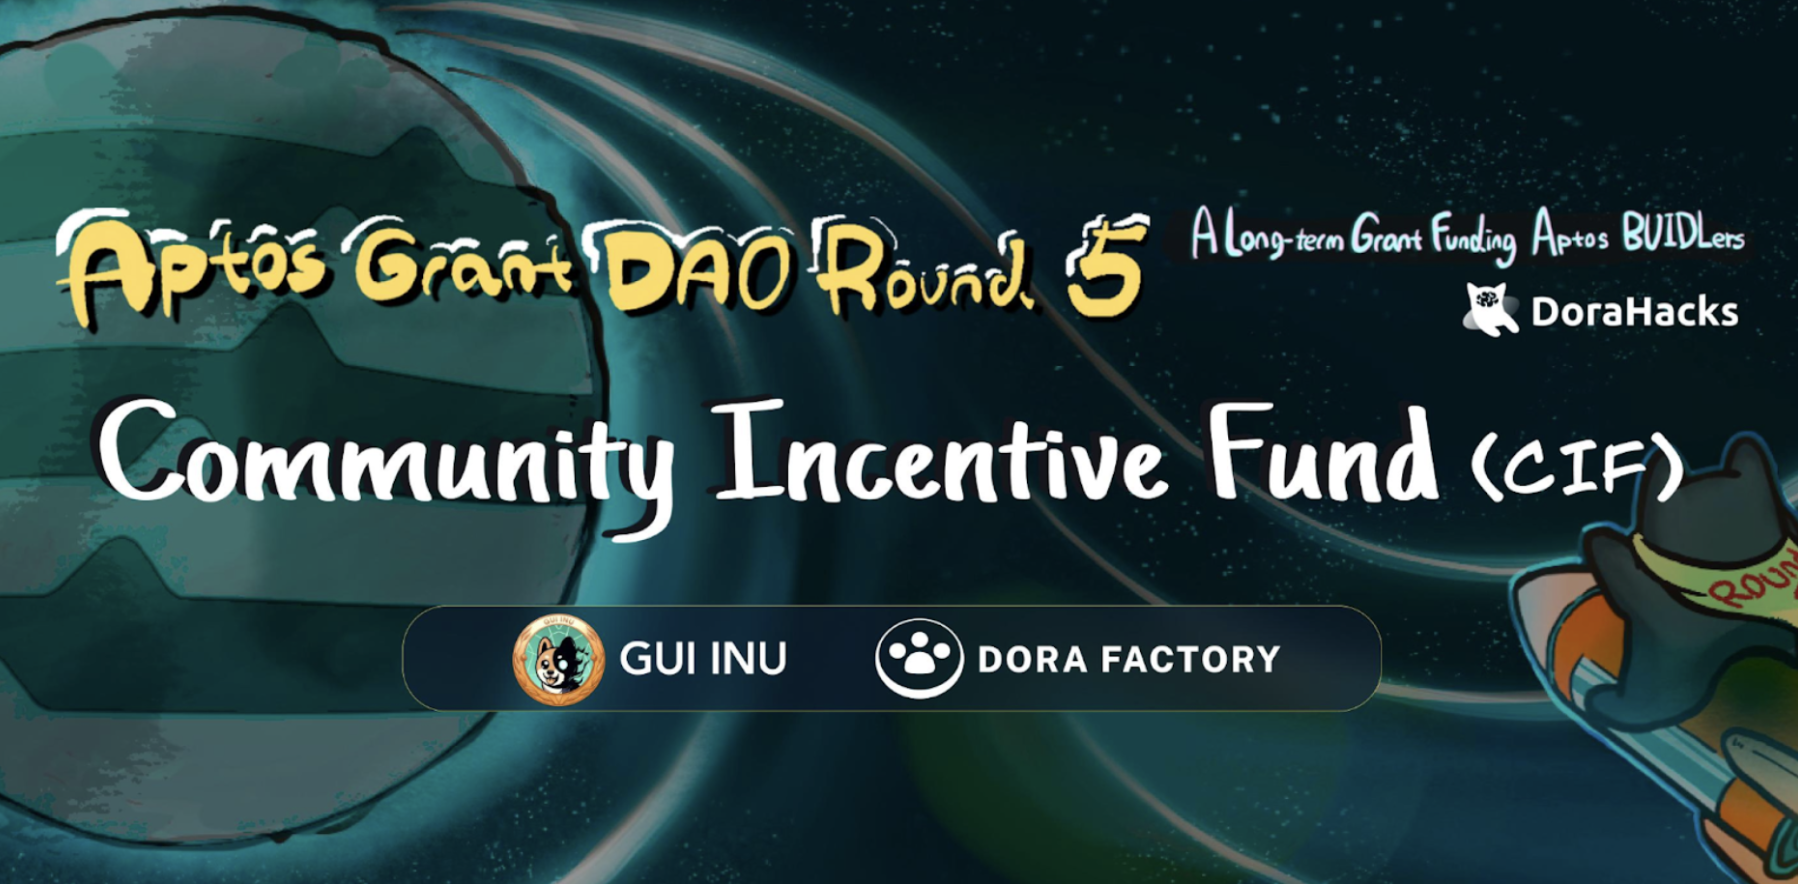 Introducing CIF (Community Incentive Fund), with Aptos Grant DAO Round5 Quadratic Funding Kick Off